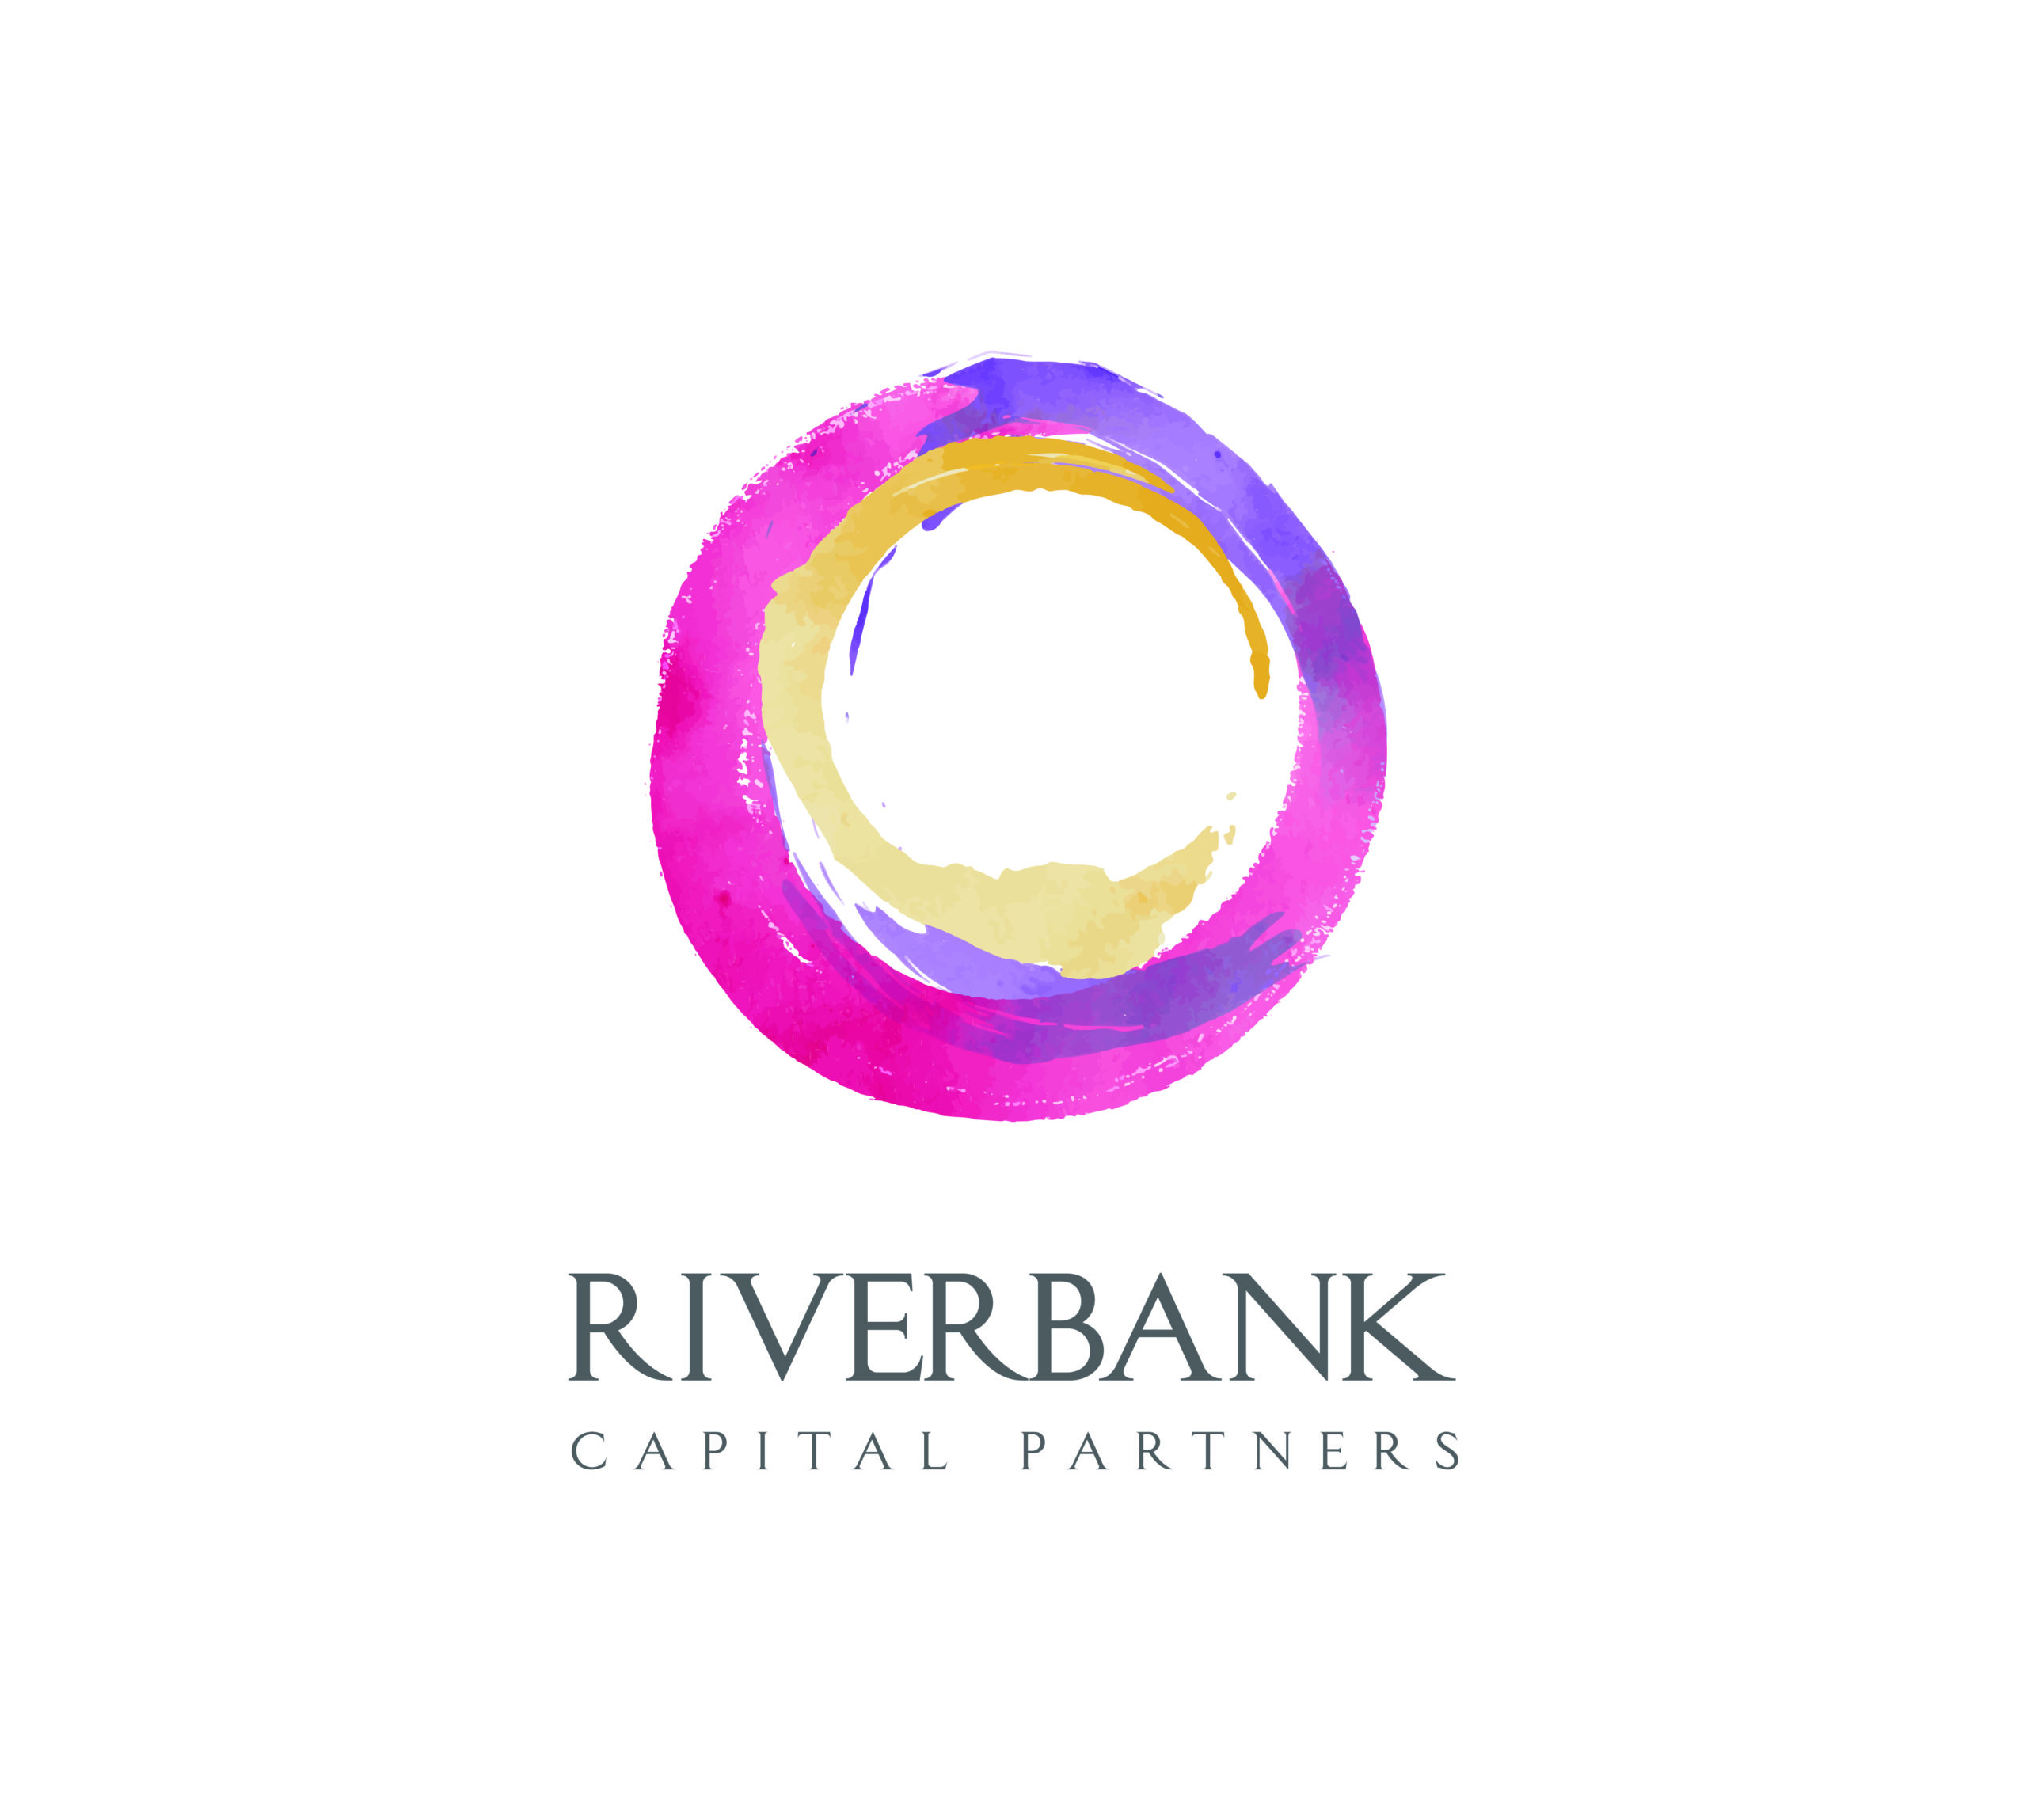 Riverbank Capital